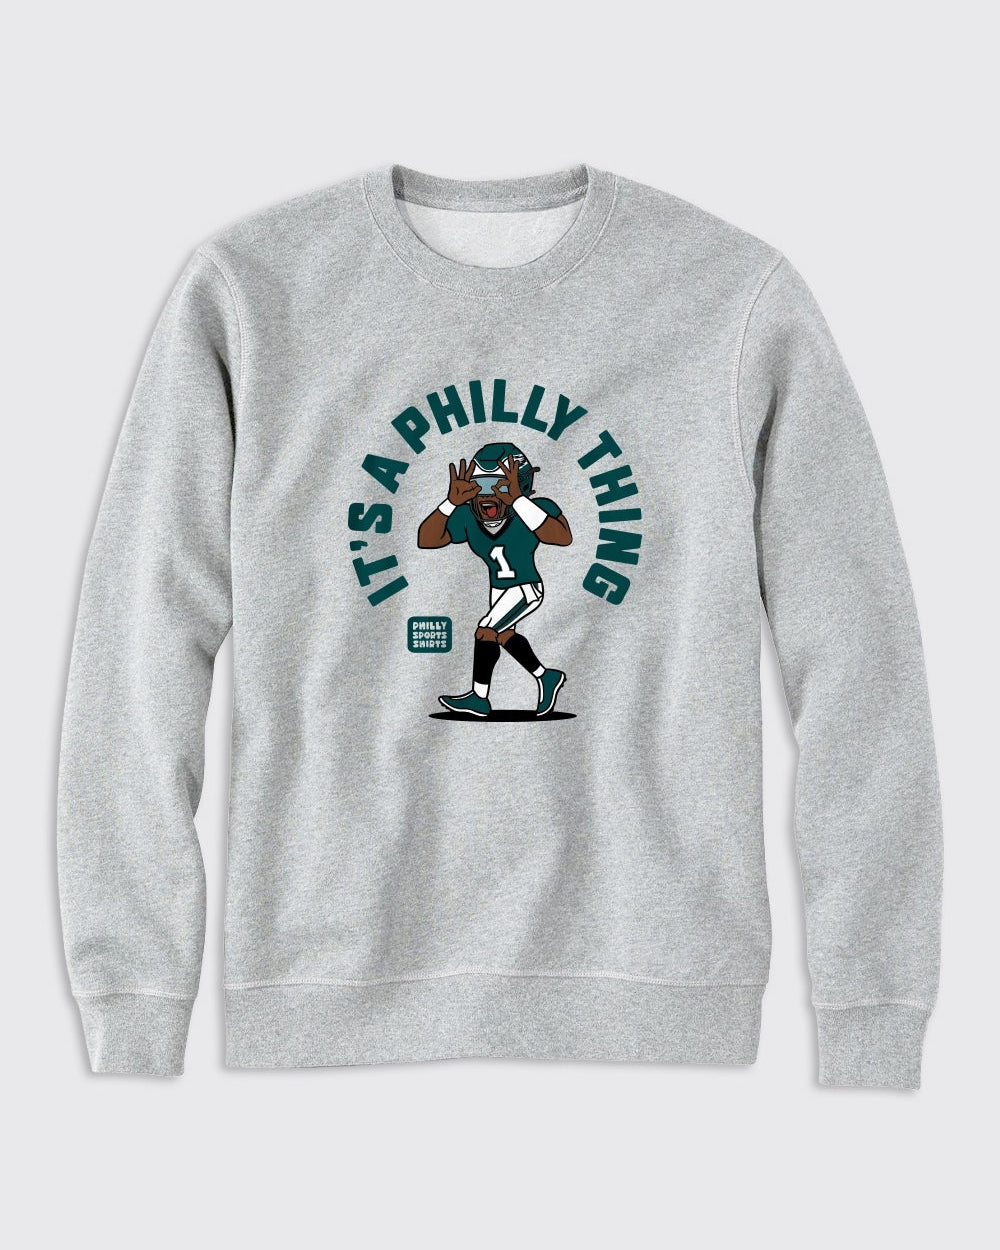 It's A Philly Thing Crewneck Sweatshirt - Crewnecks, Eagles - Philly Sports Shirts